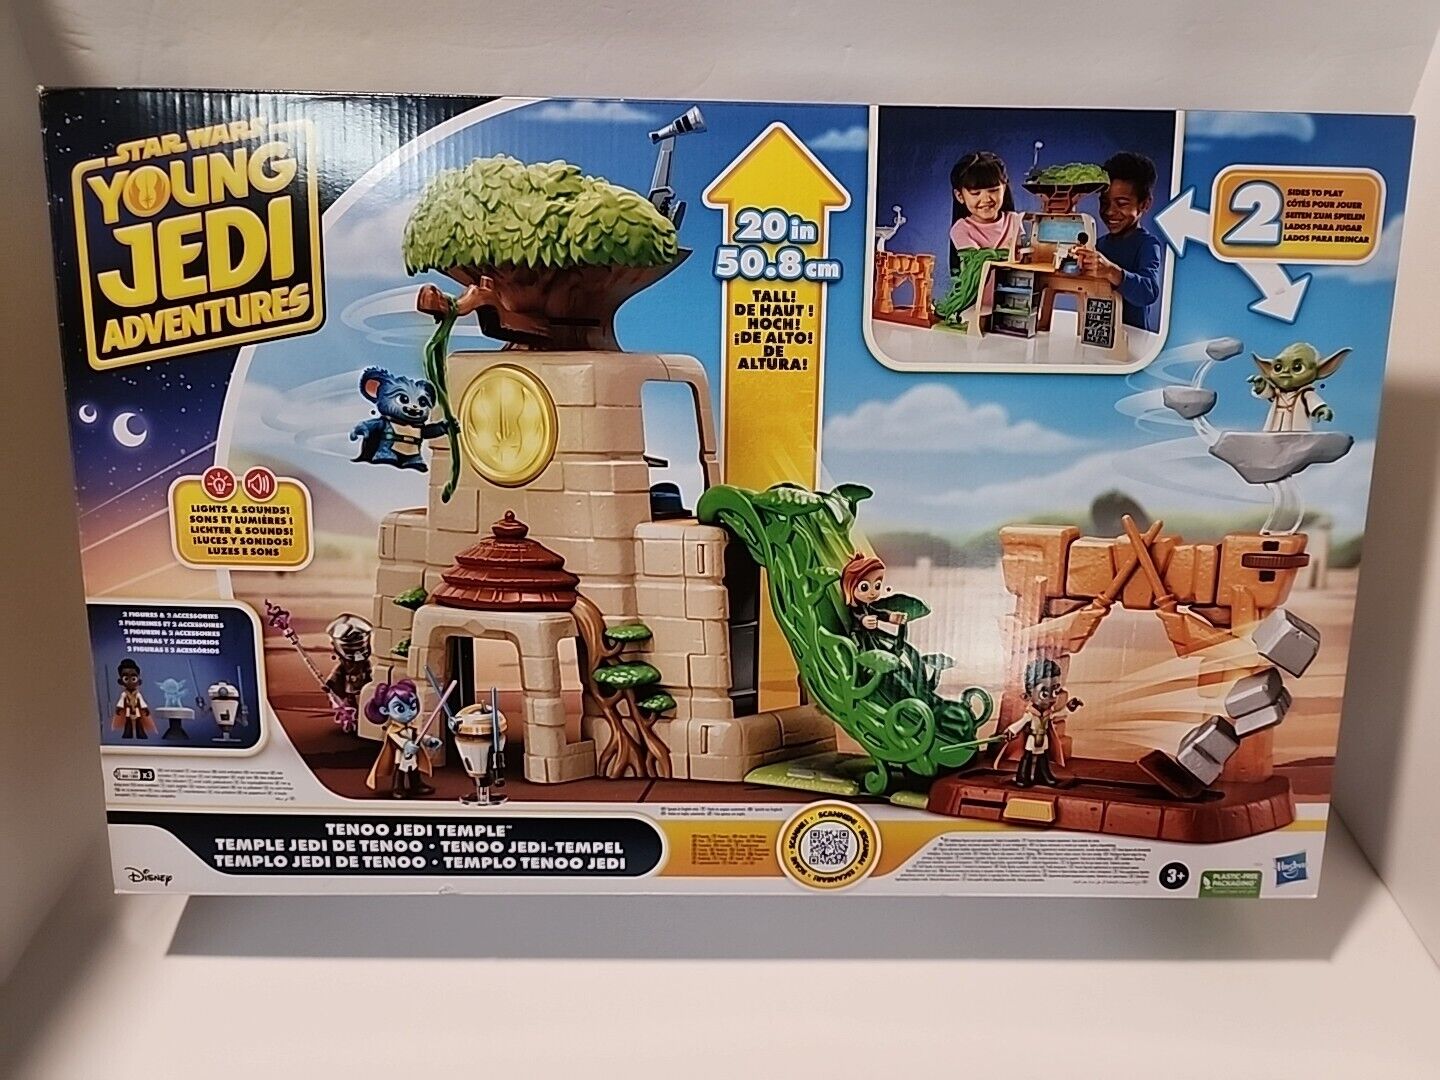 Awesome NEW! Star Wars Young Jedi Adventures –  Tenoo Jedi Temple Playset – Disney NIB on eBay